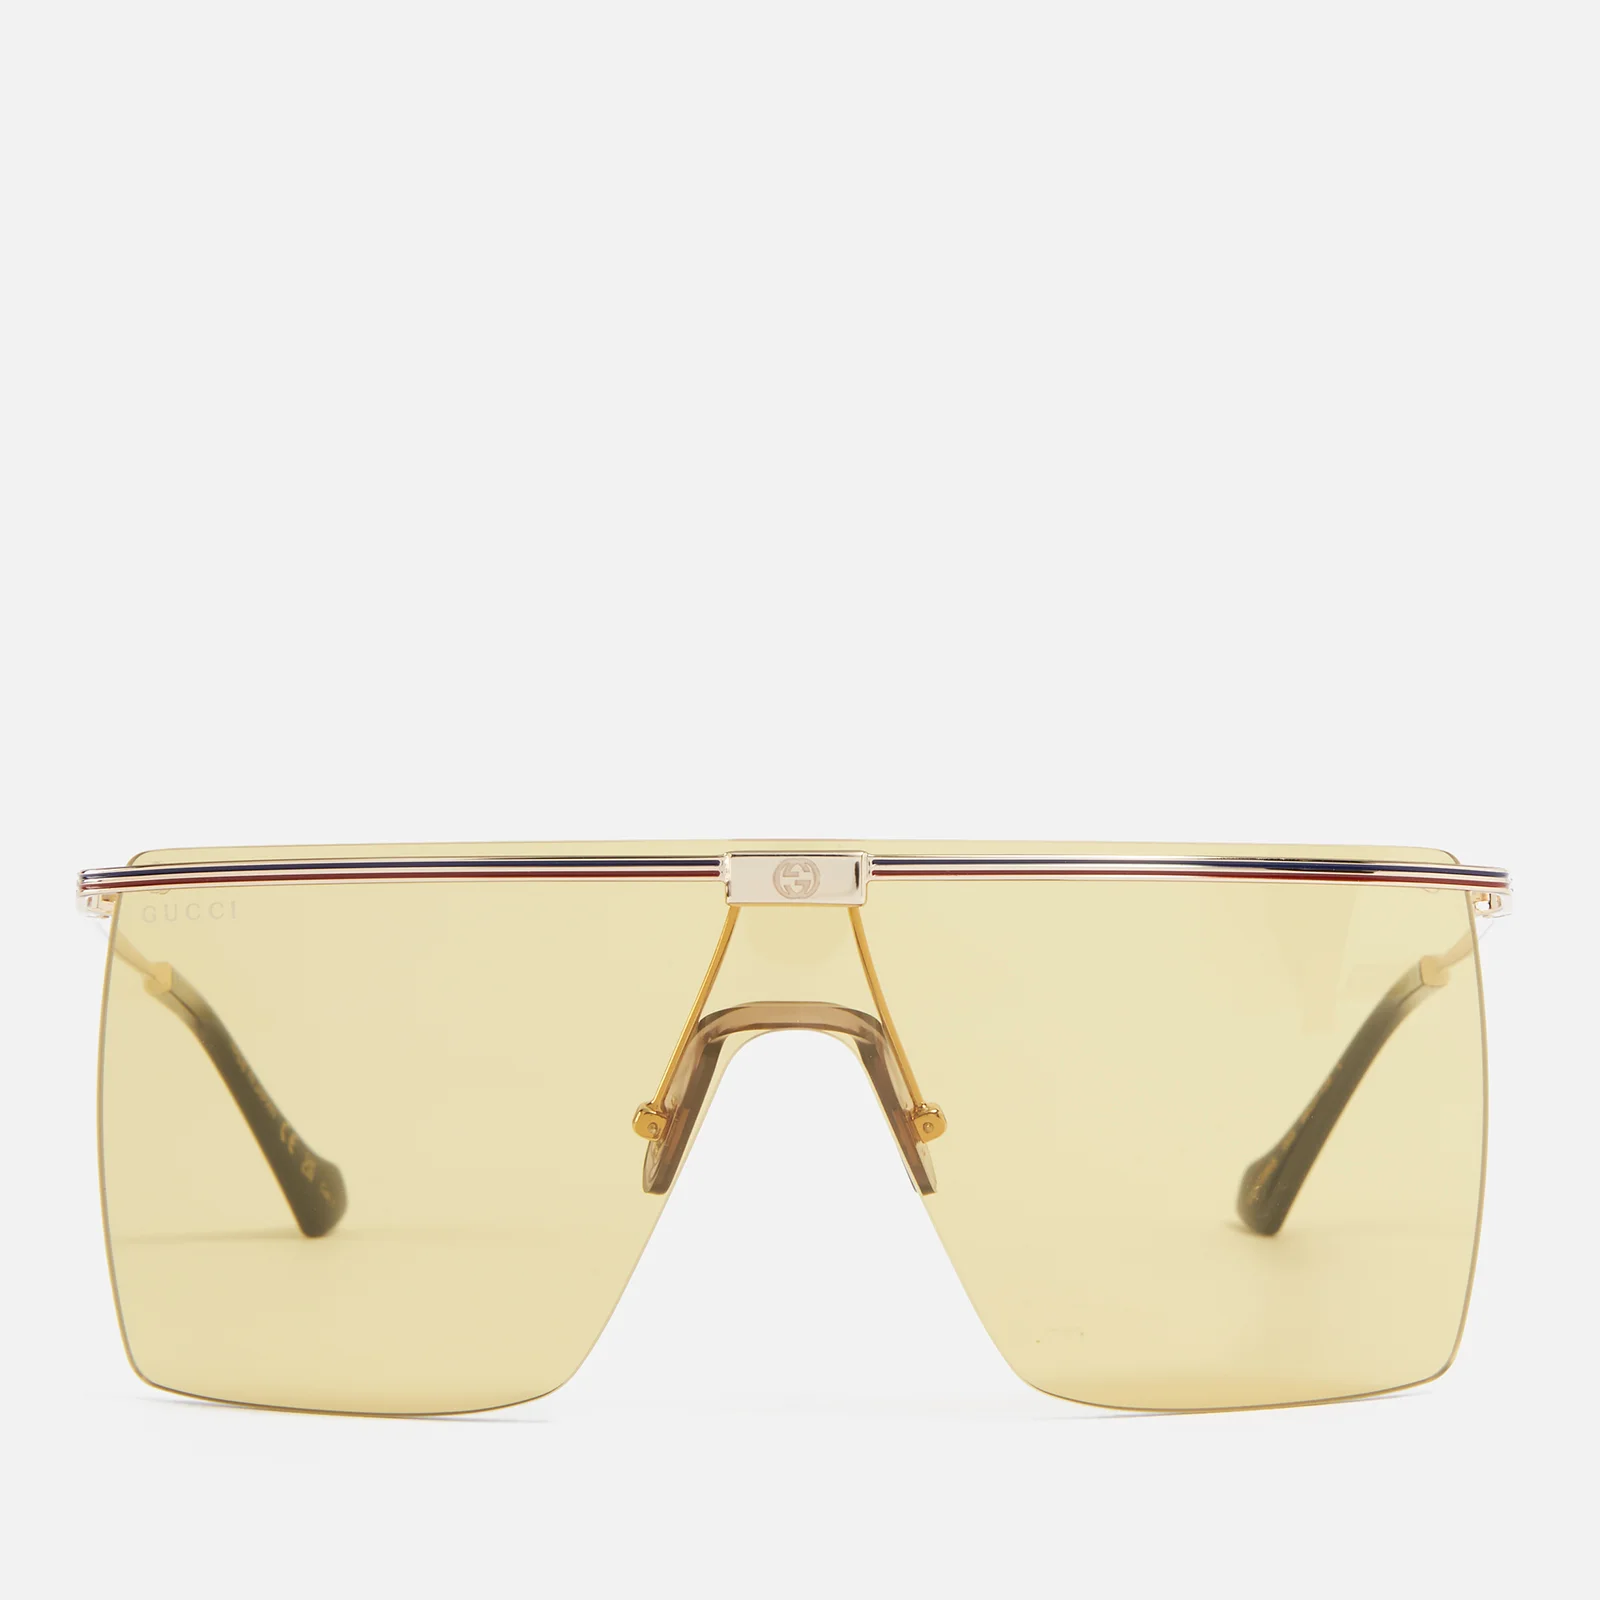 Gucci Visors Square-Frame Gold-Tone Metal Sunglasses Image 1